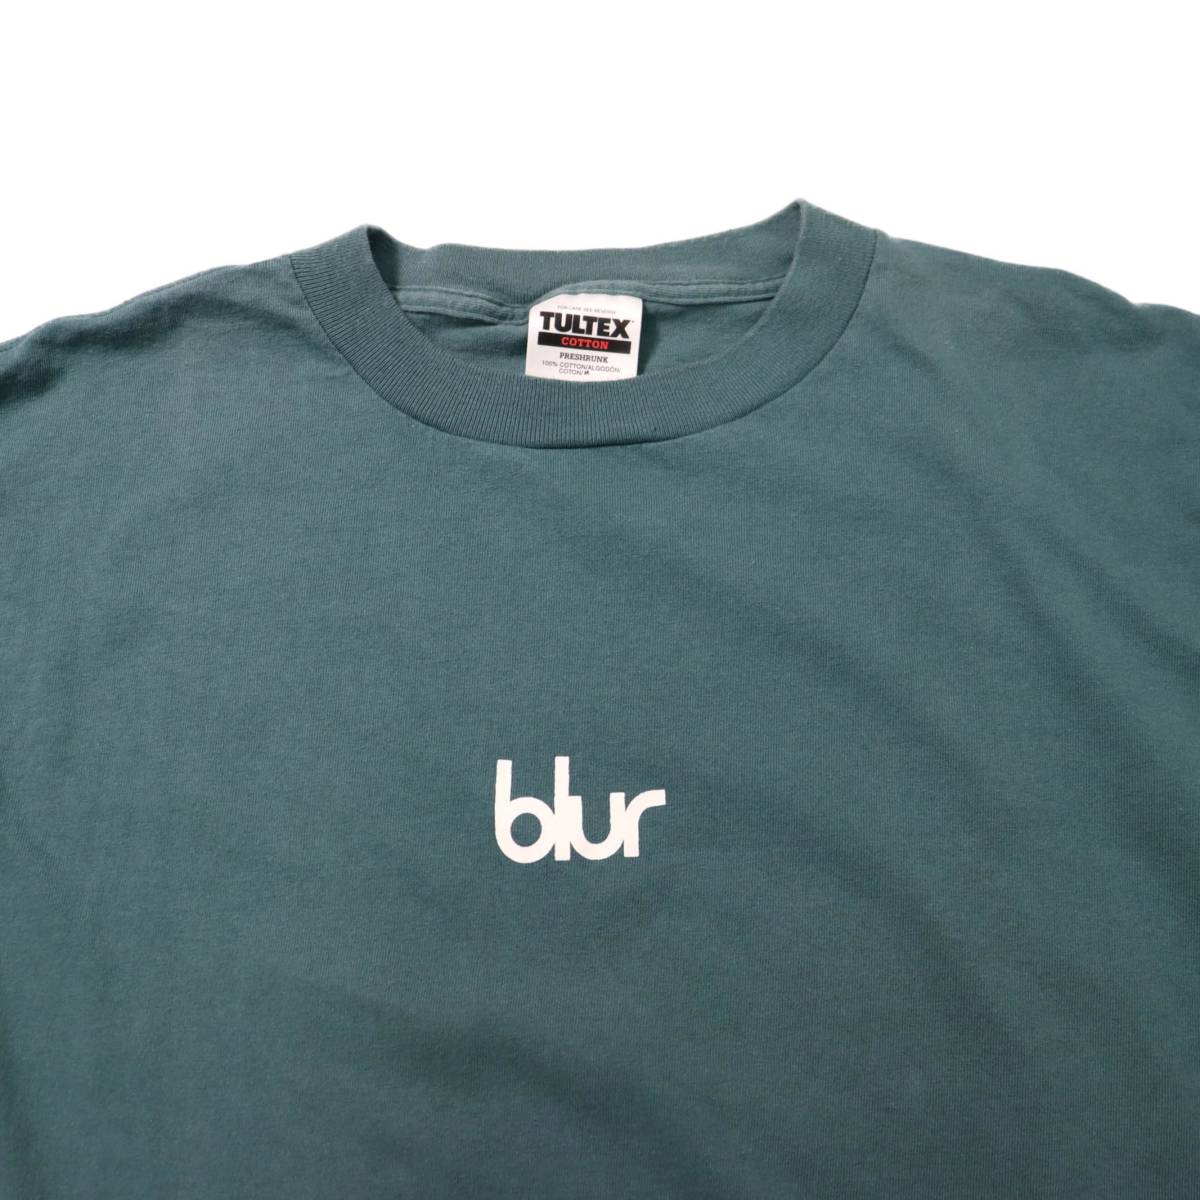 XL] 90s Blur ロゴ プリント Tシャツ ブルー グリーン Tultex USA